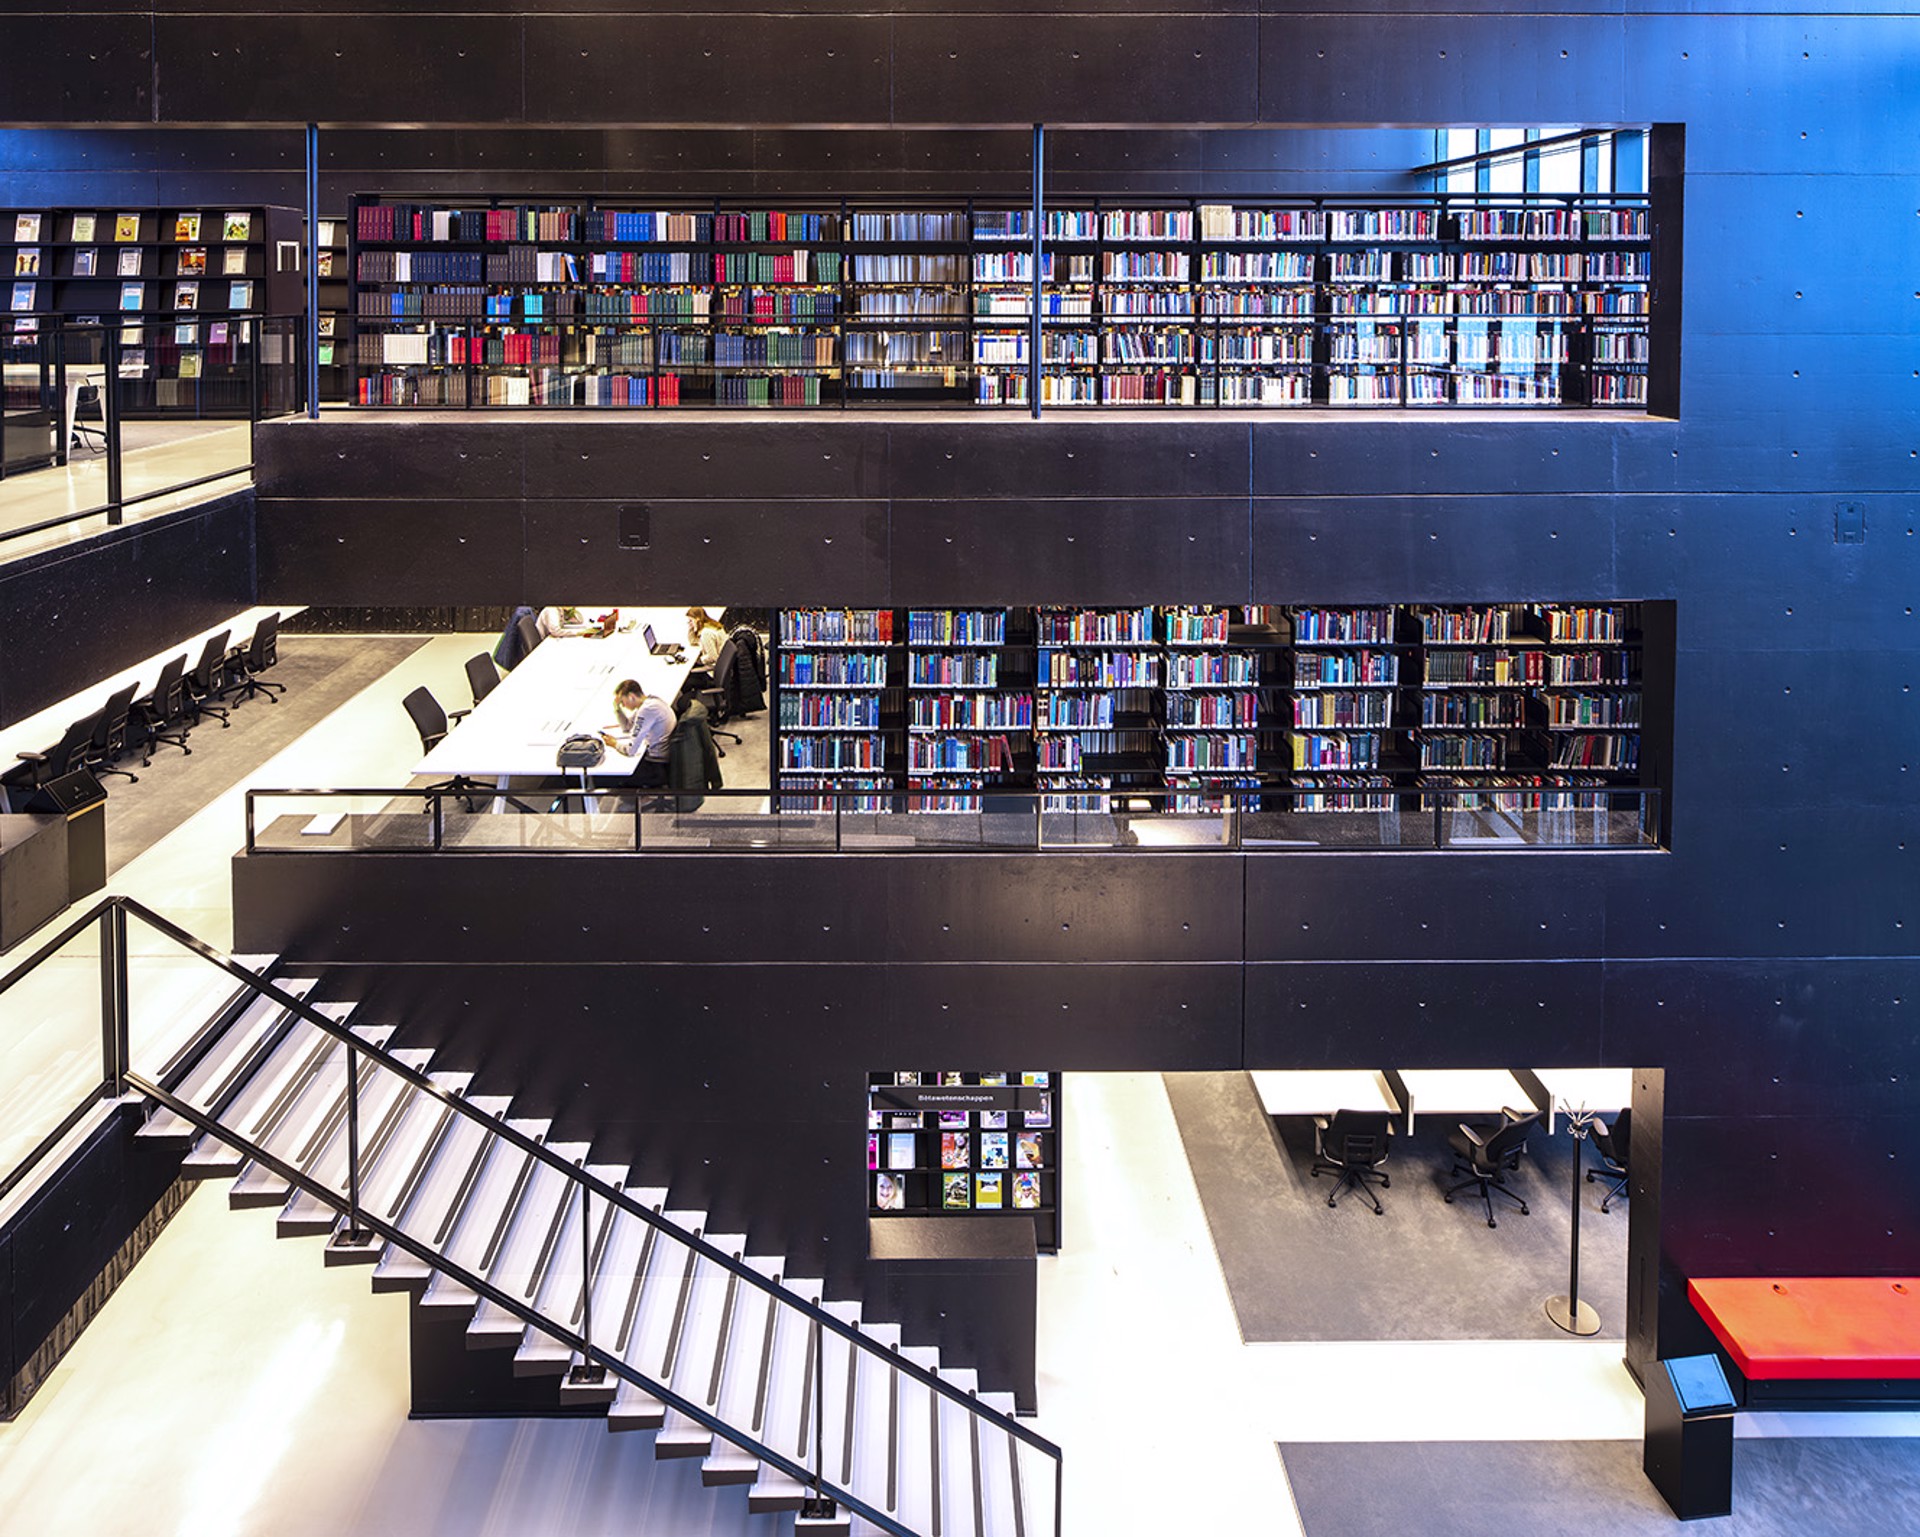 Uithof Library, Utrecht, Netherlands by Reinhard Goerner